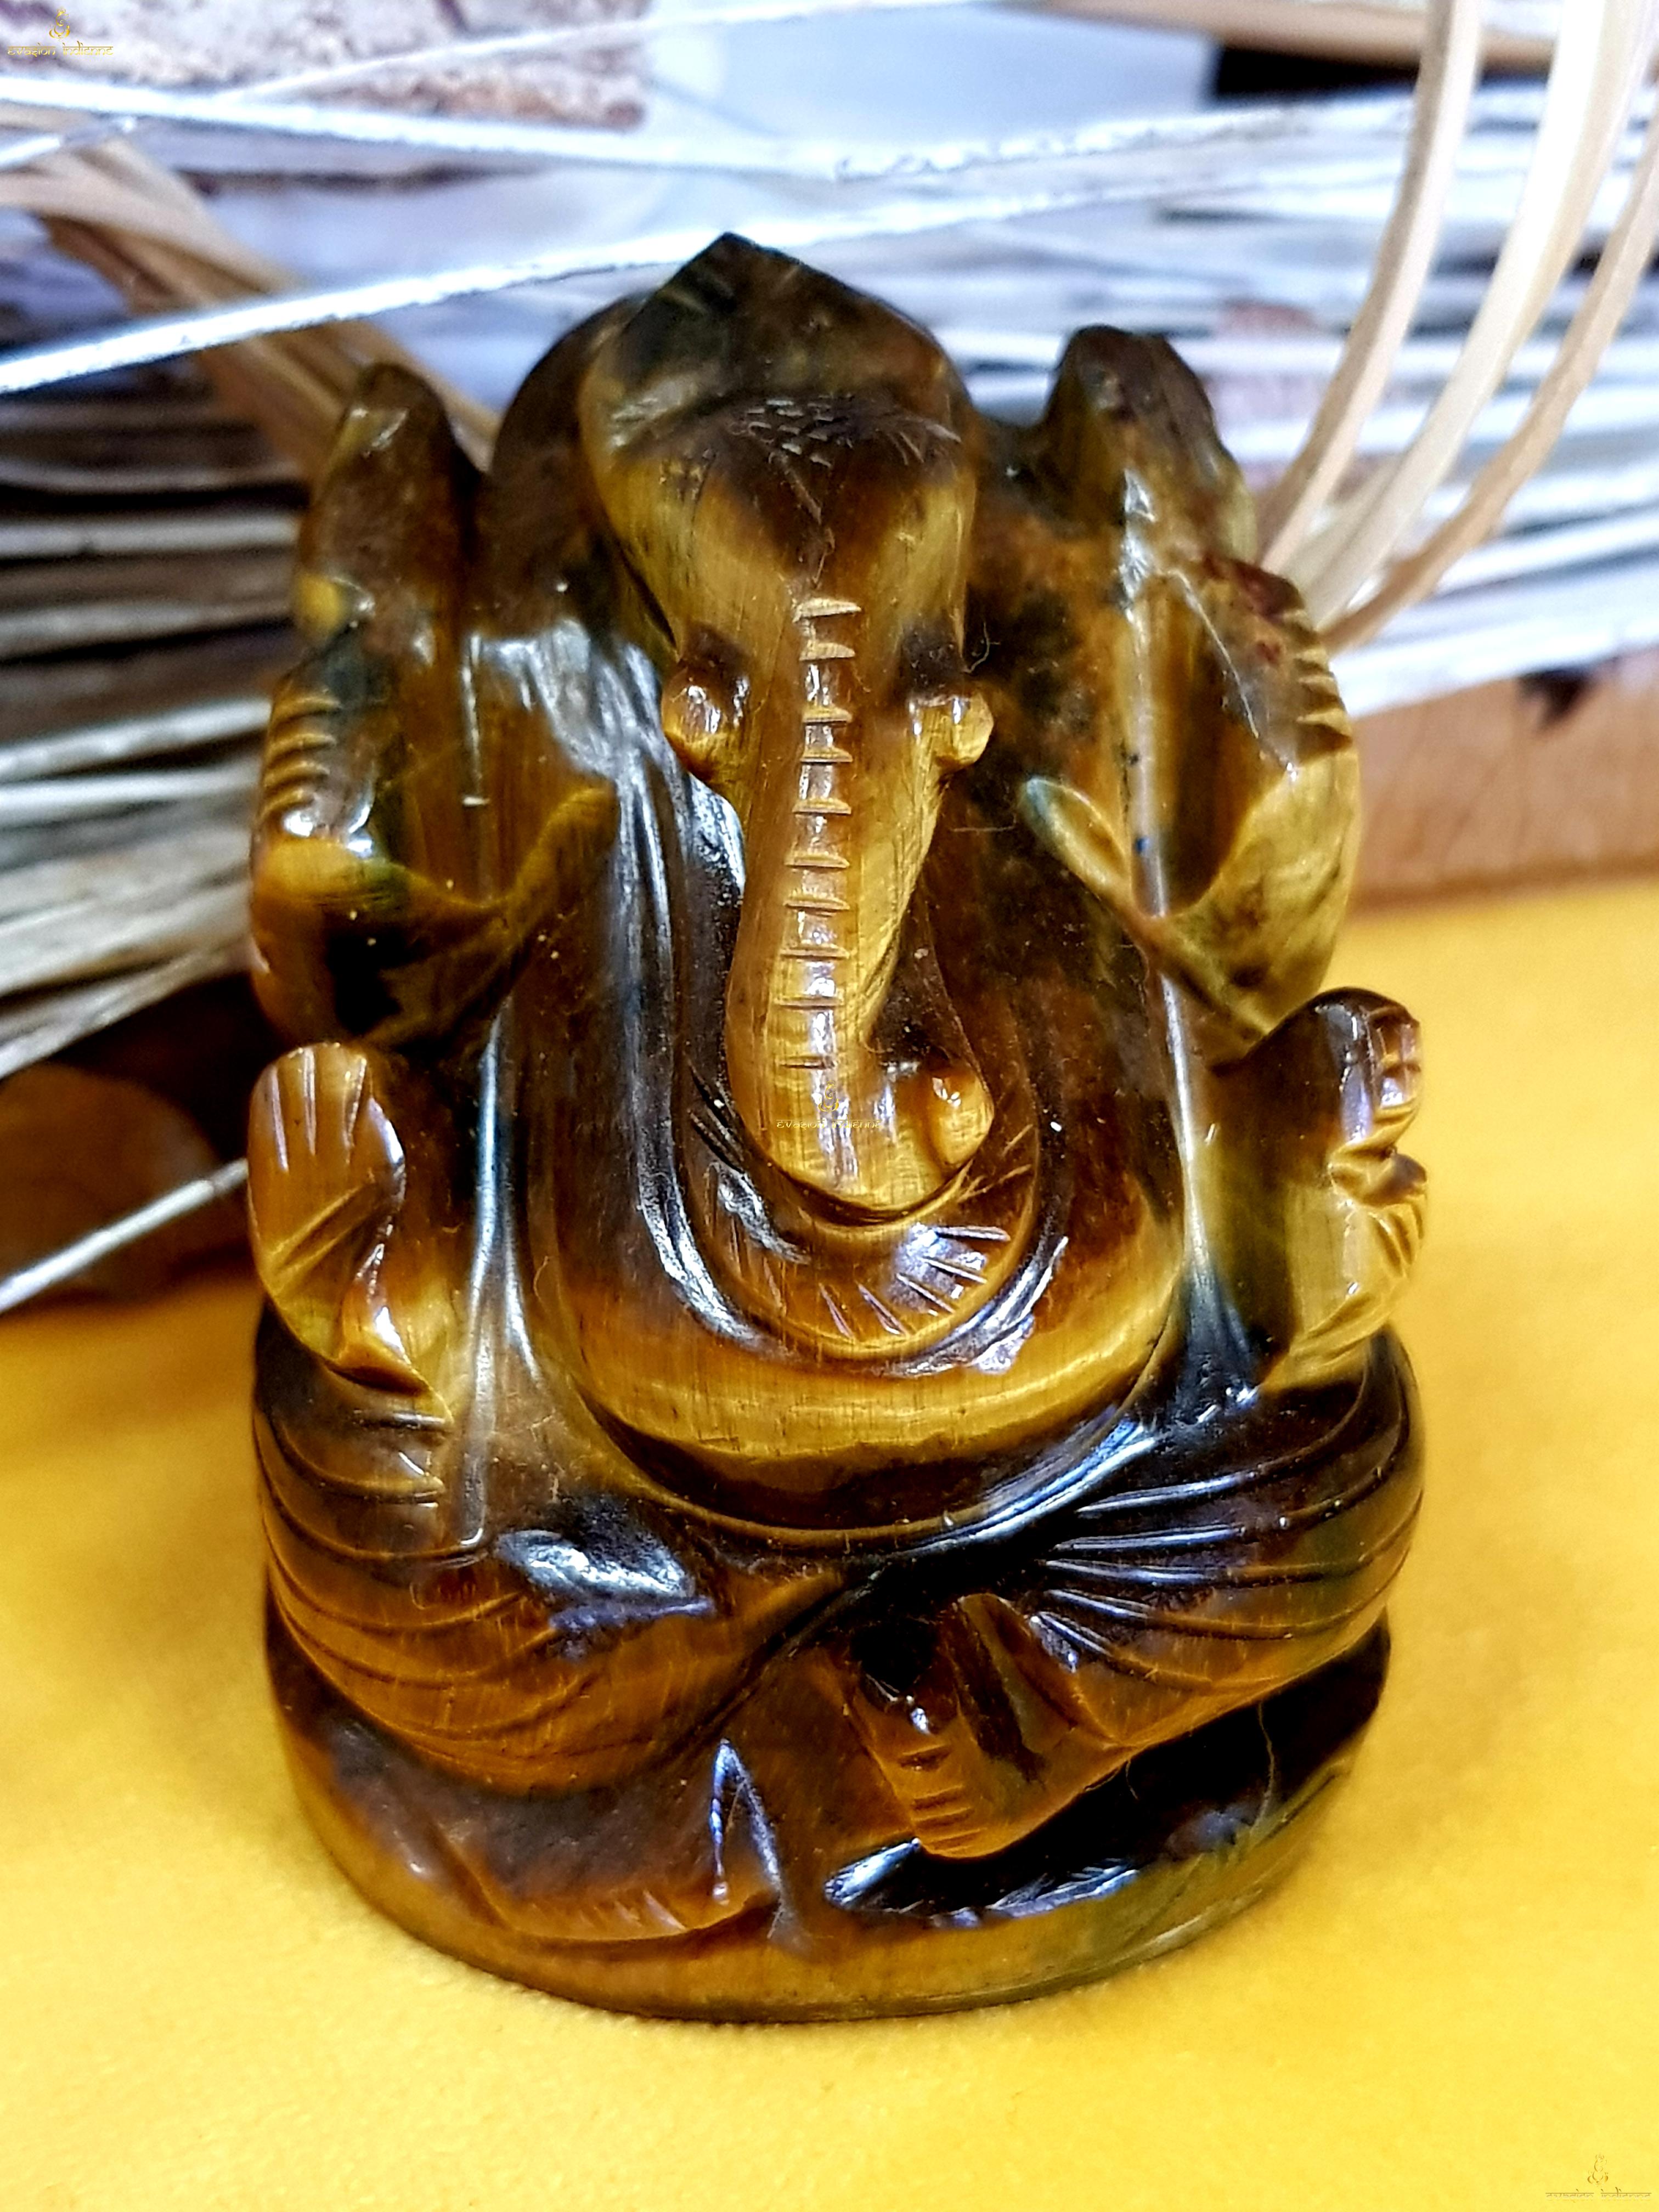 Statue Ganesh